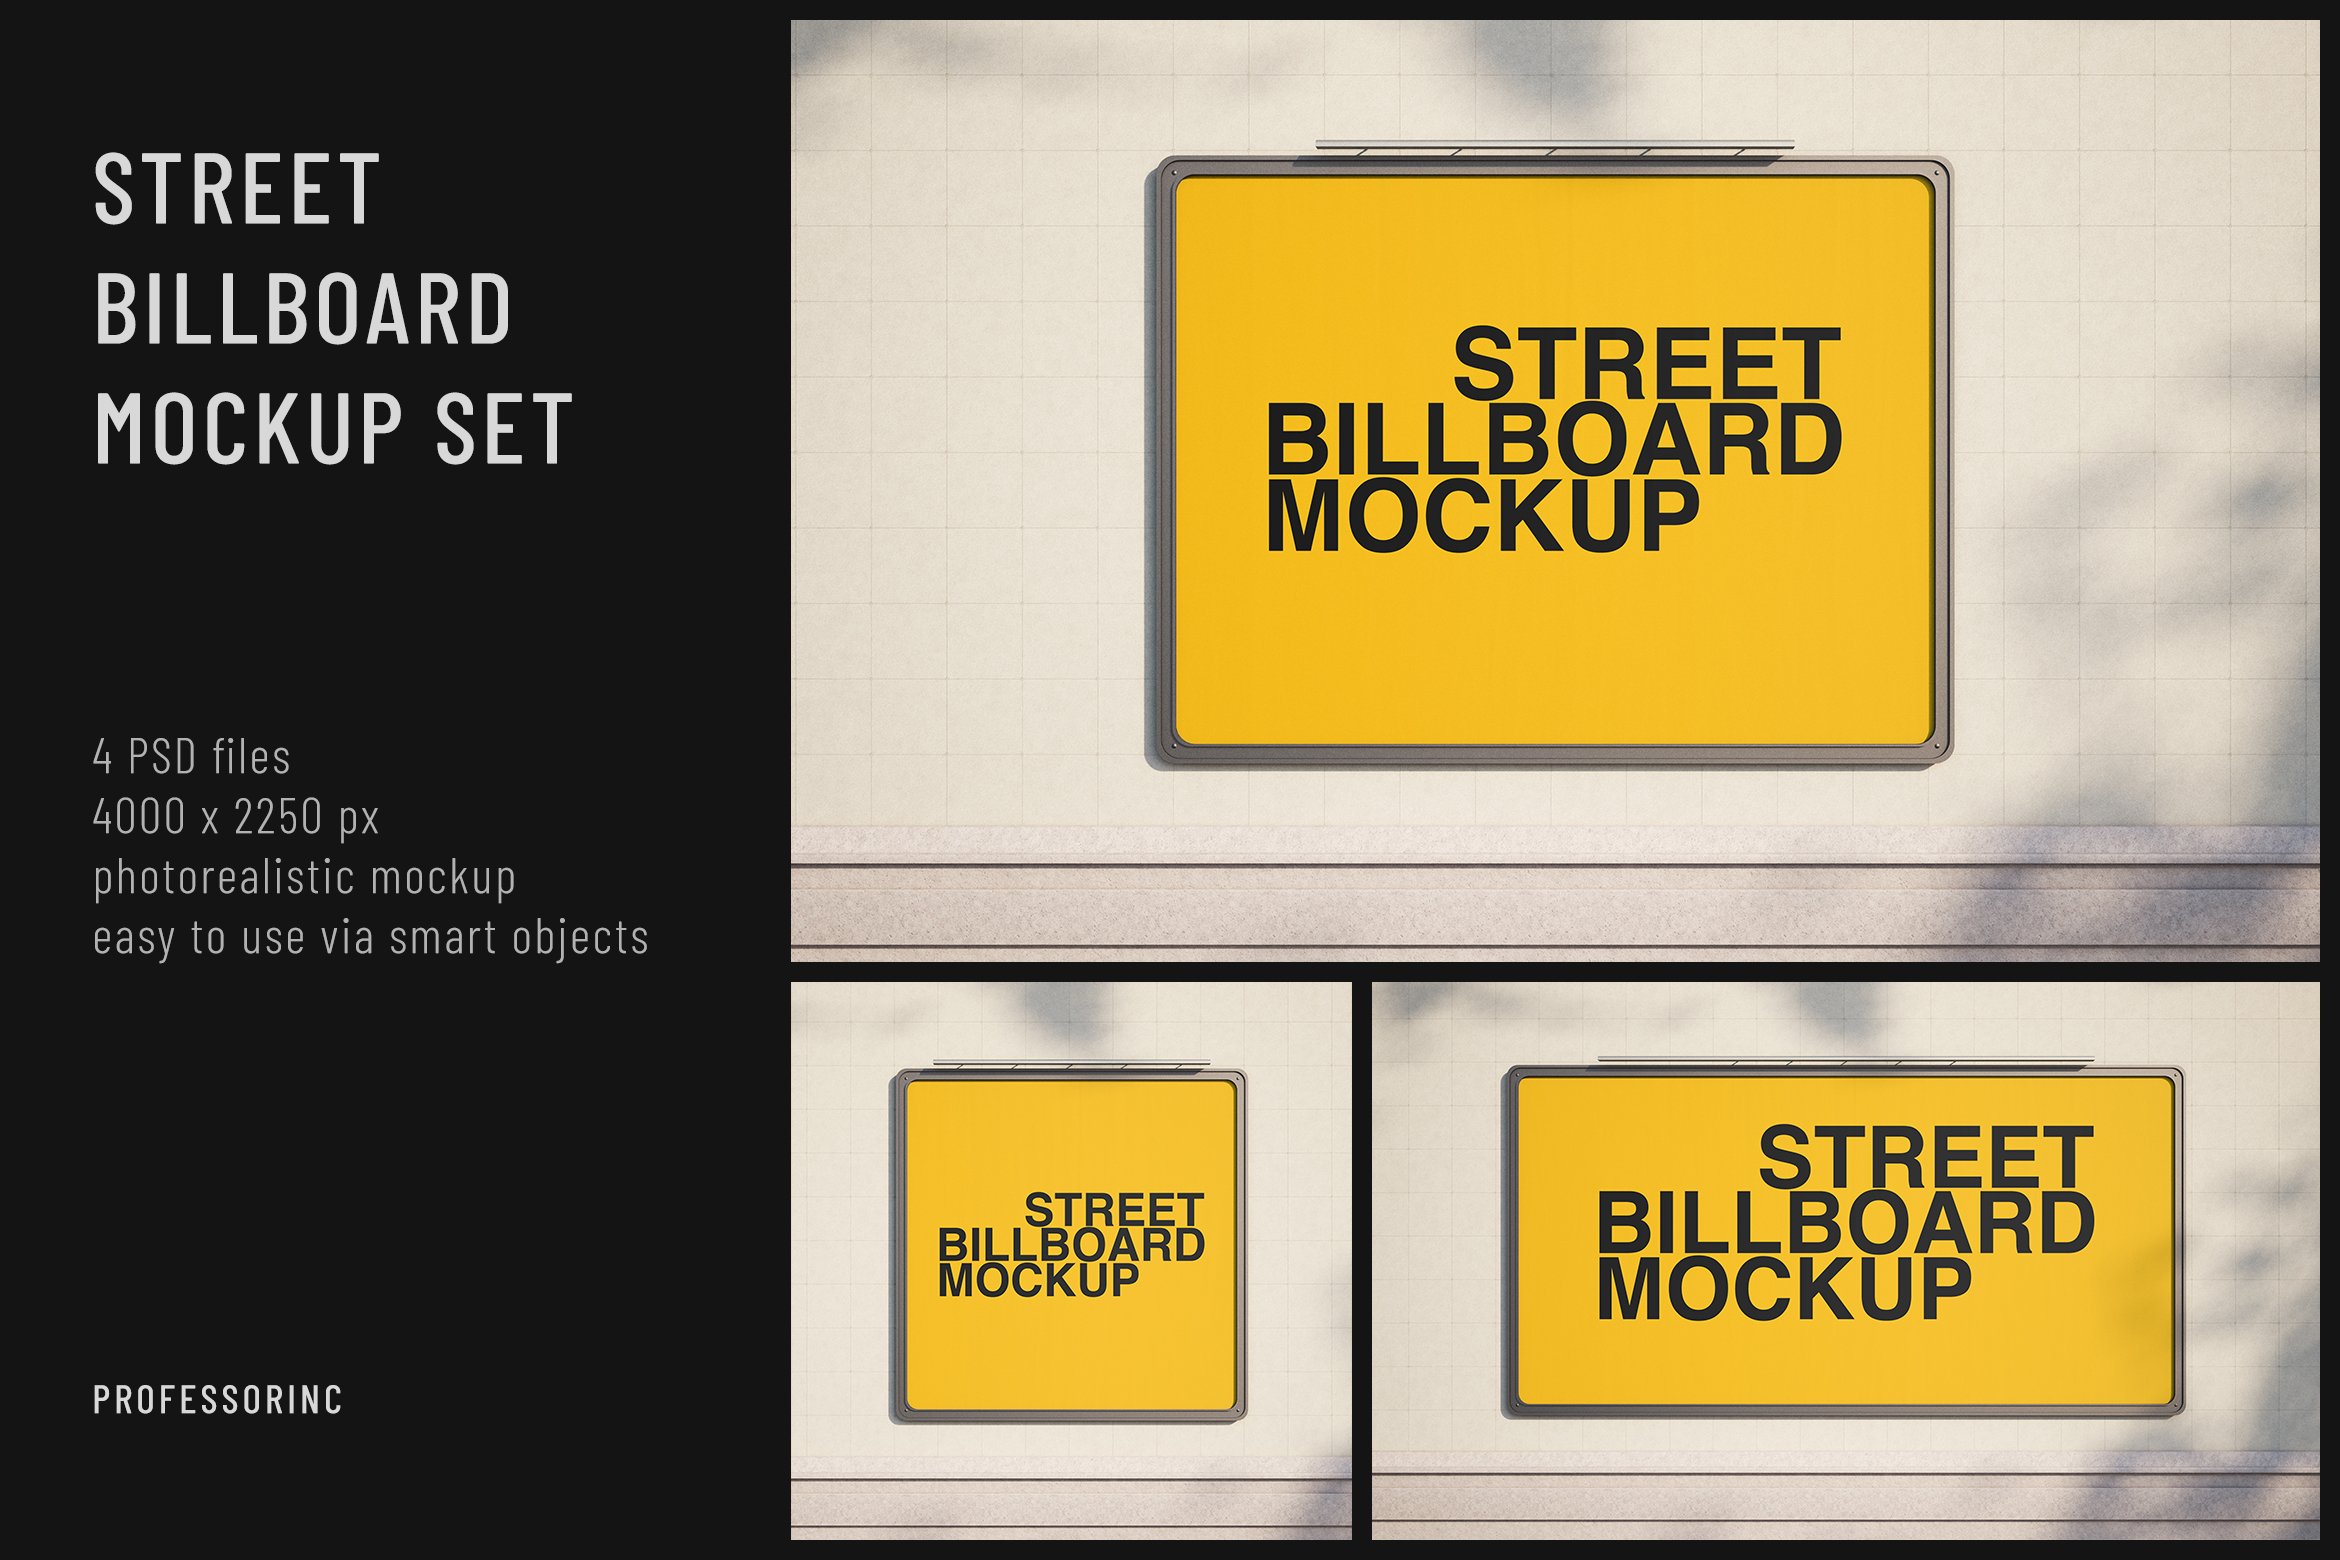 Street Billboard Mockup Set cover image.